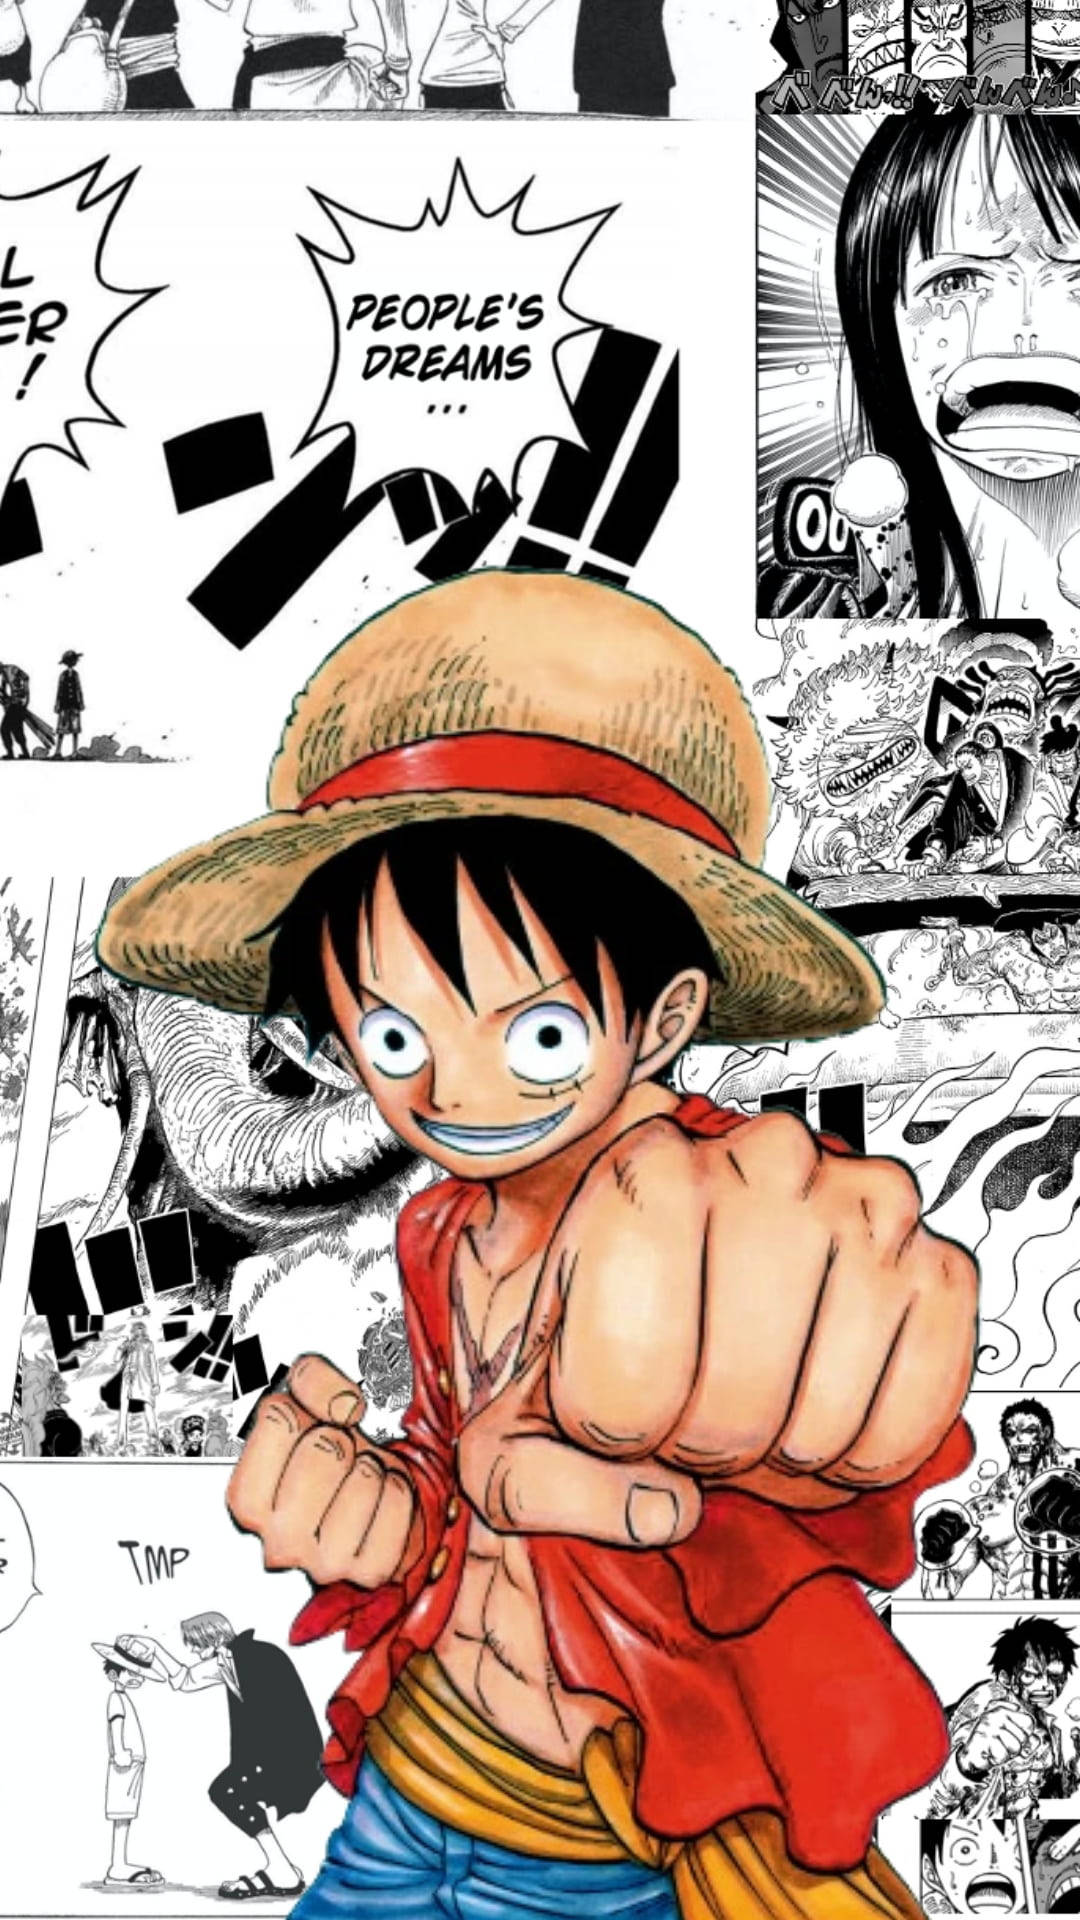 Punching One Piece Luffy PFP Comic Strip Fanart Wallpaper